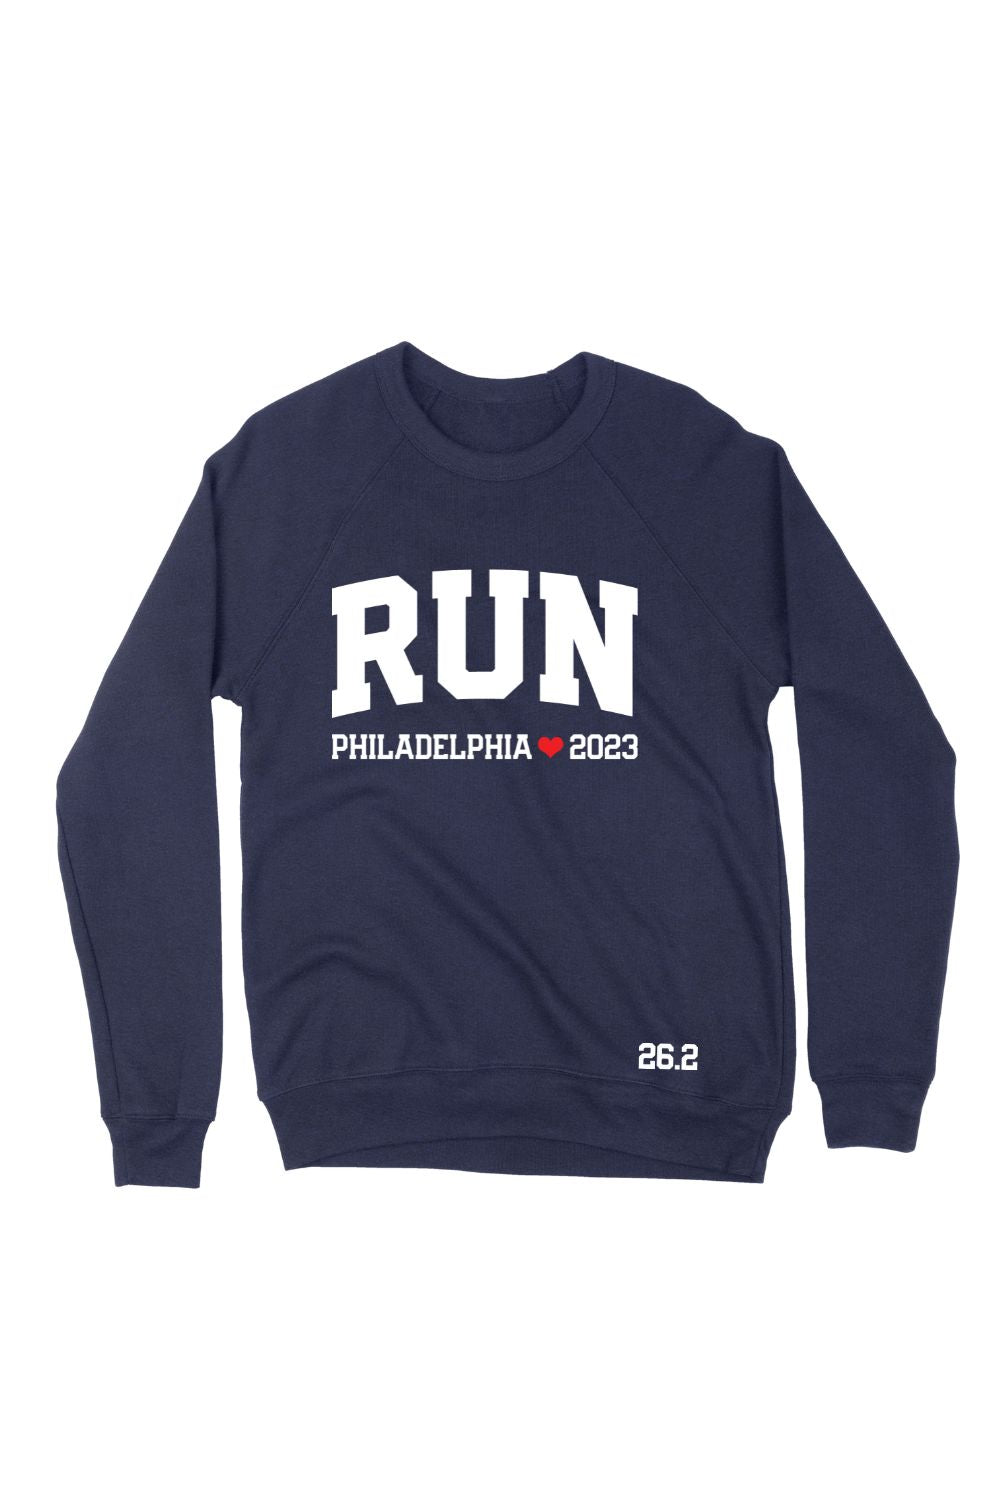 RUN Philadelphia 2023 Sweatshirt